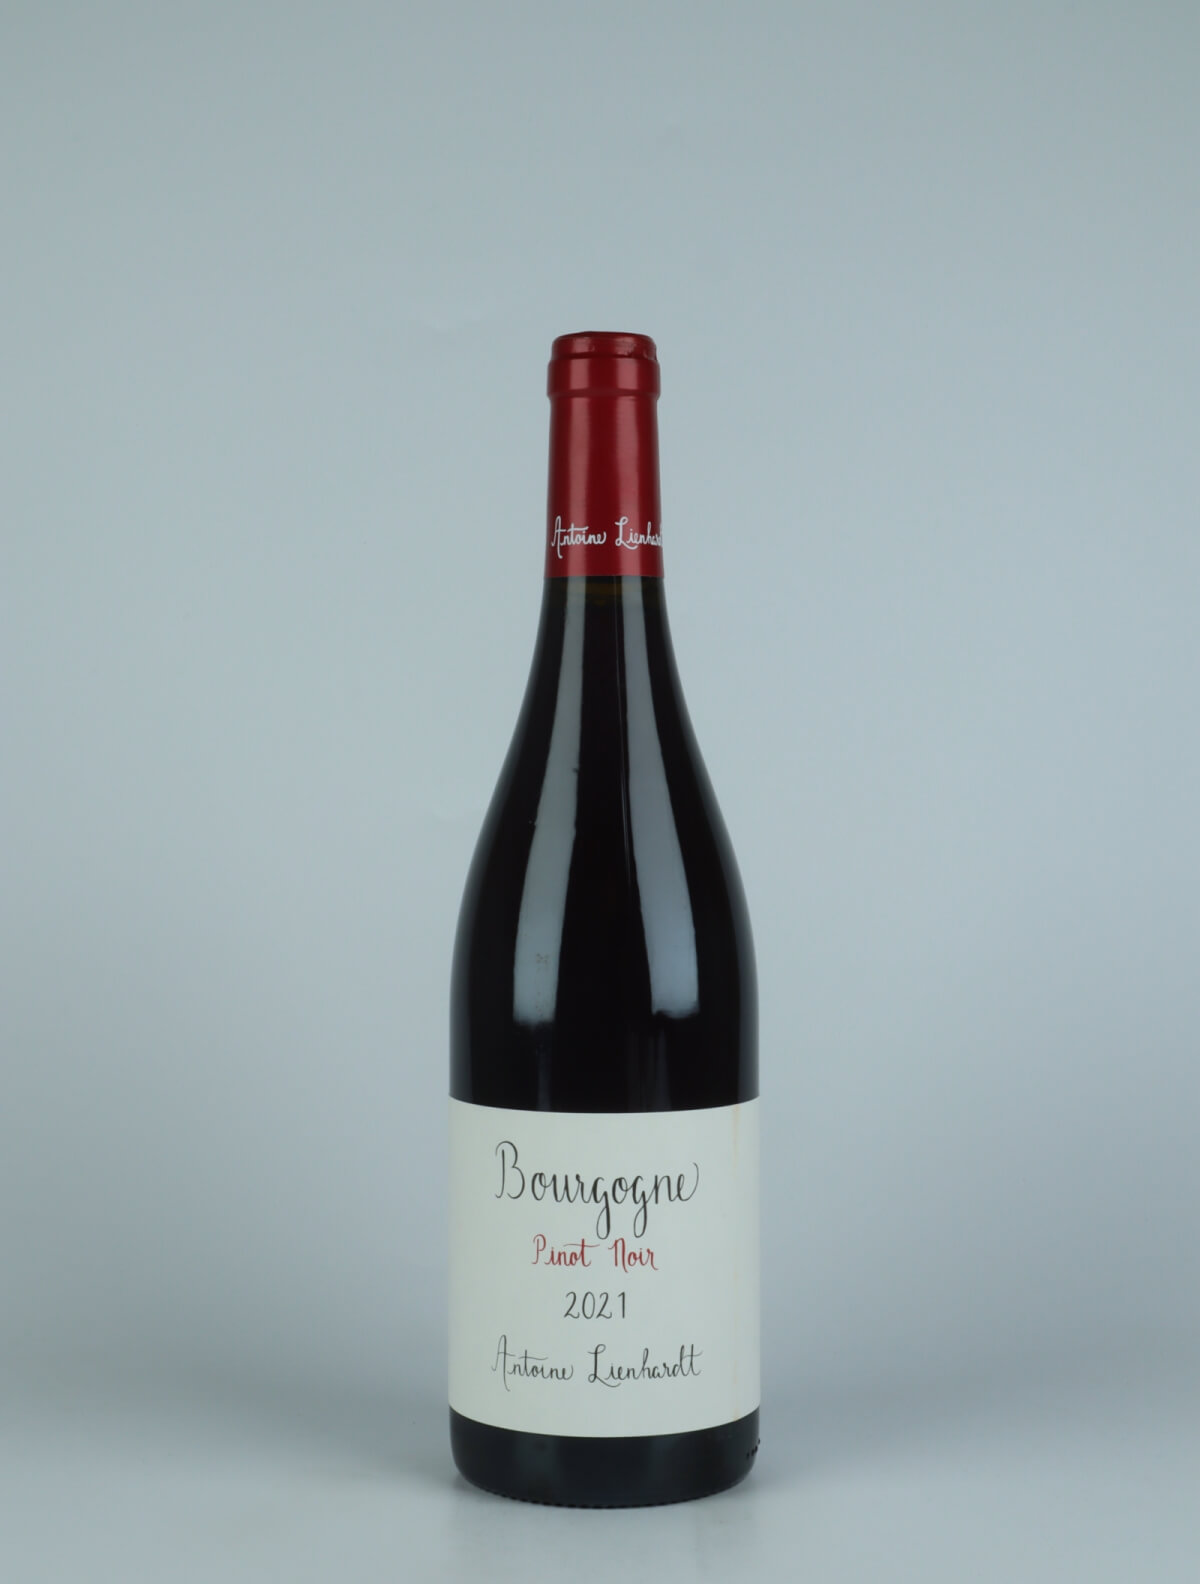 En flaske 2021 Bourgogne Rouge Rødvin fra Antoine Lienhardt, Bourgogne i Frankrig